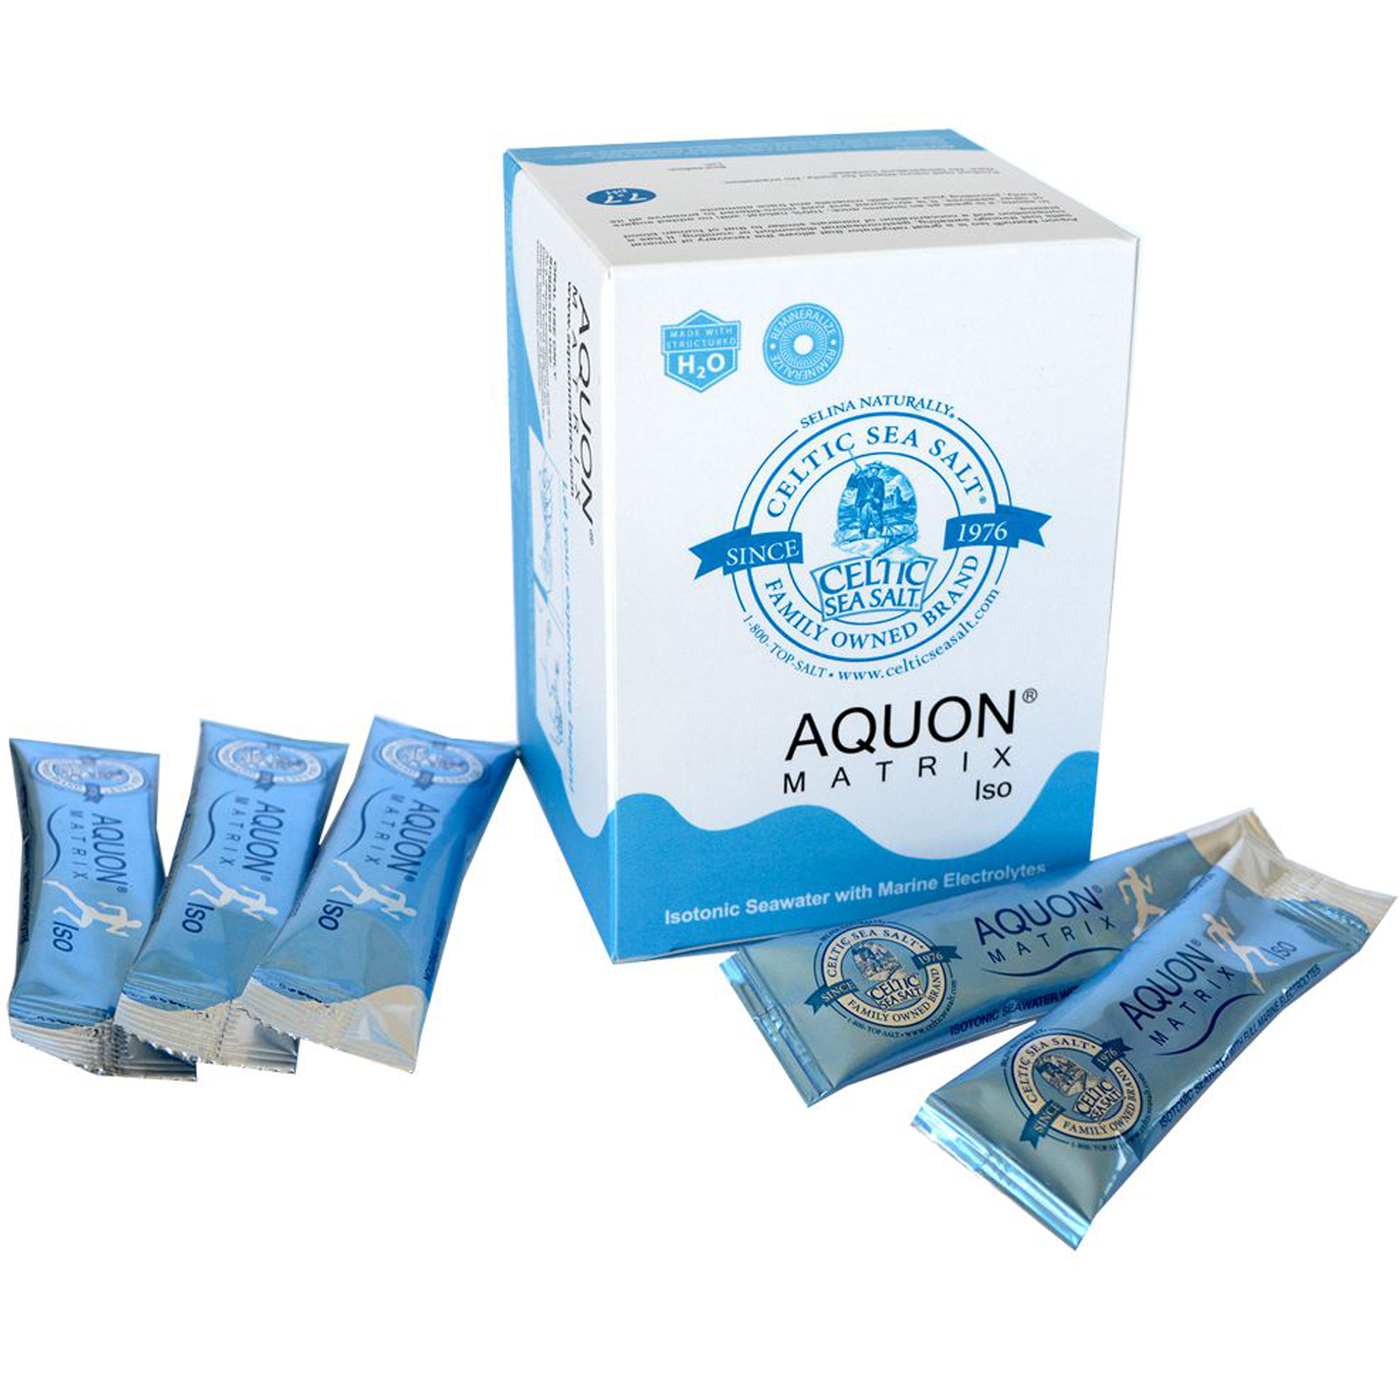 Aquon Matrix® Isotonic s Curated Wellness